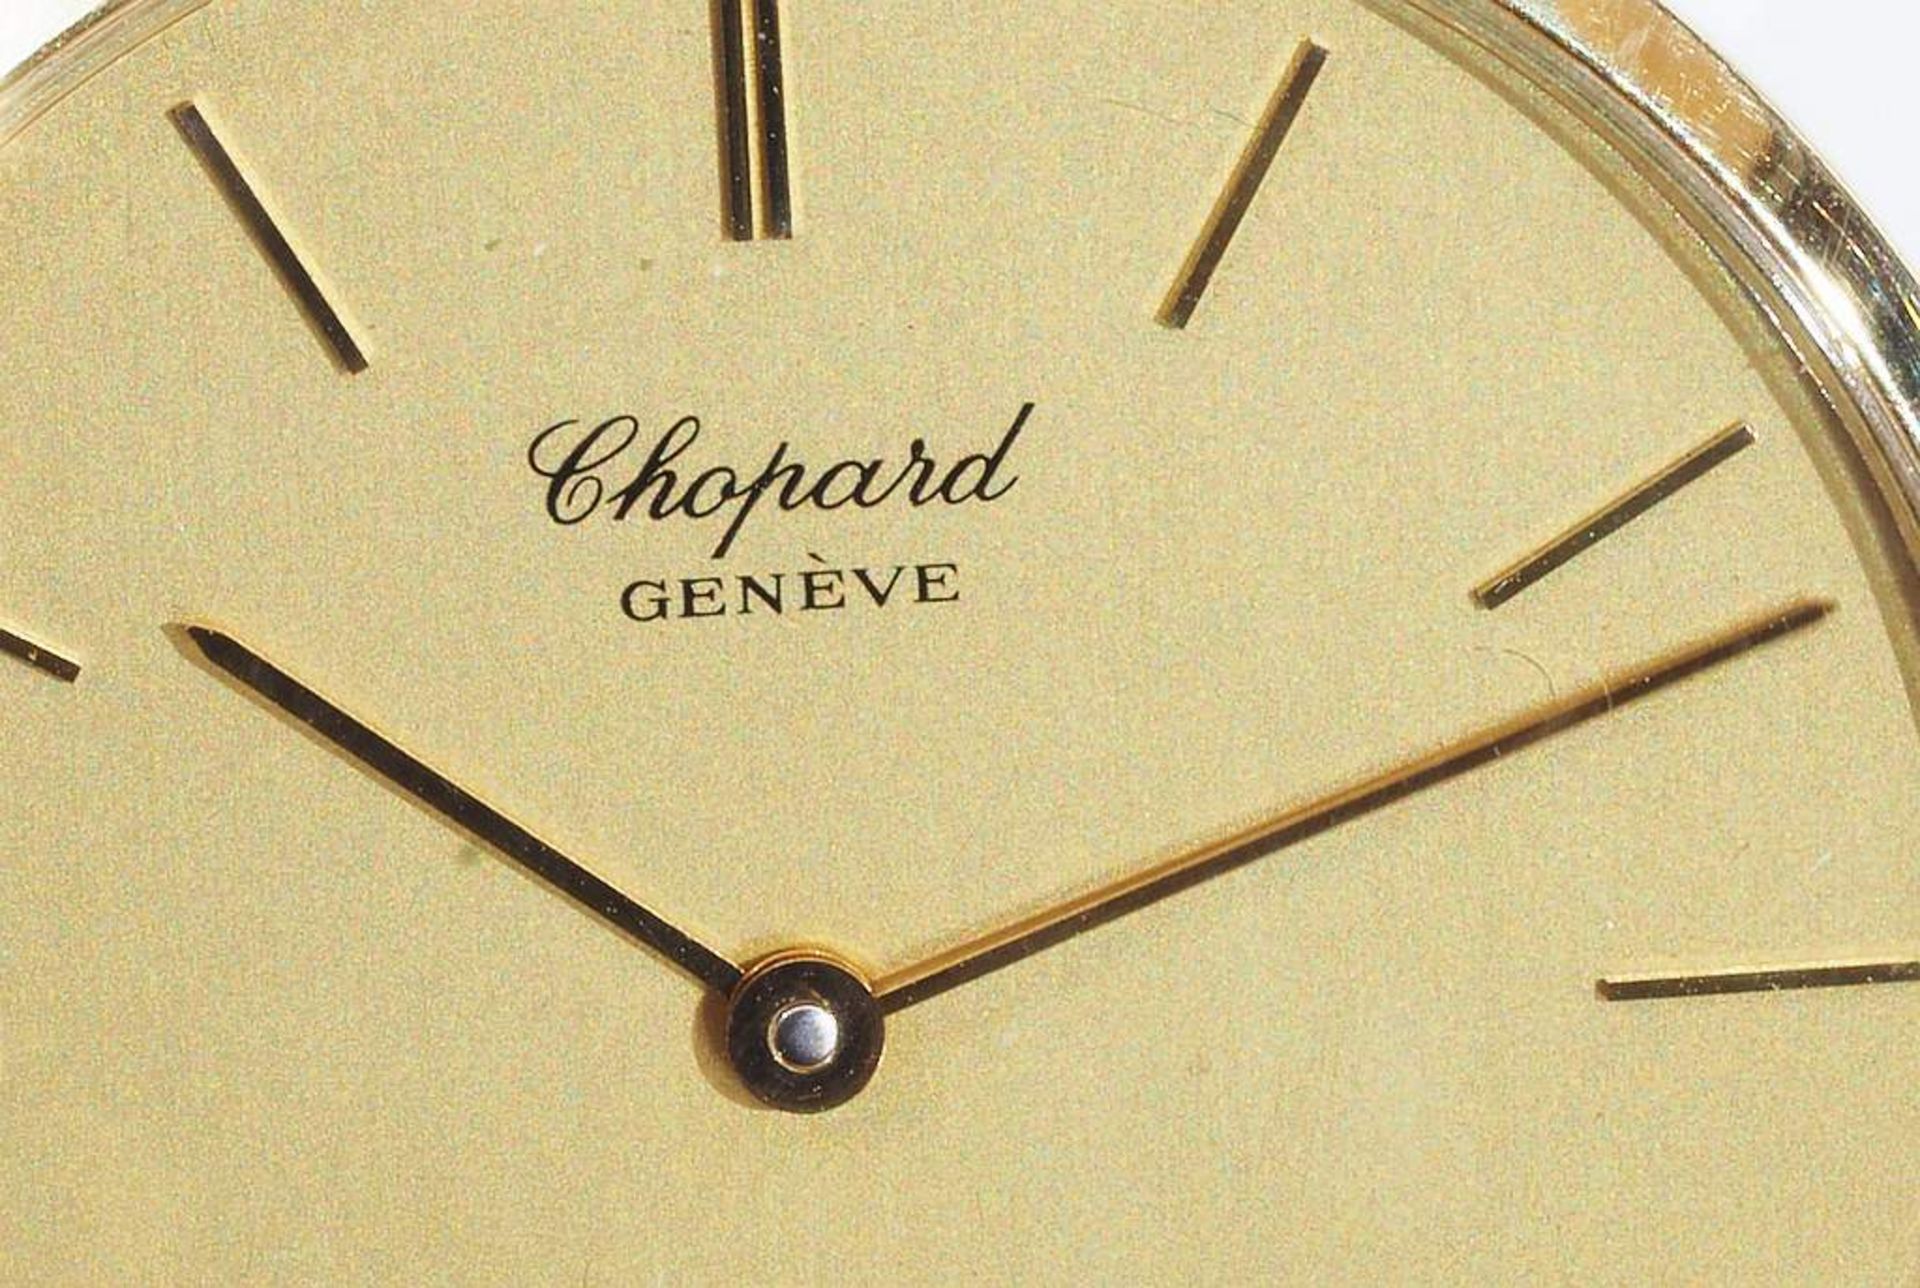 Herrenarmbanduhr "CHOPARD" Geneve, 750 Gold - Image 3 of 6